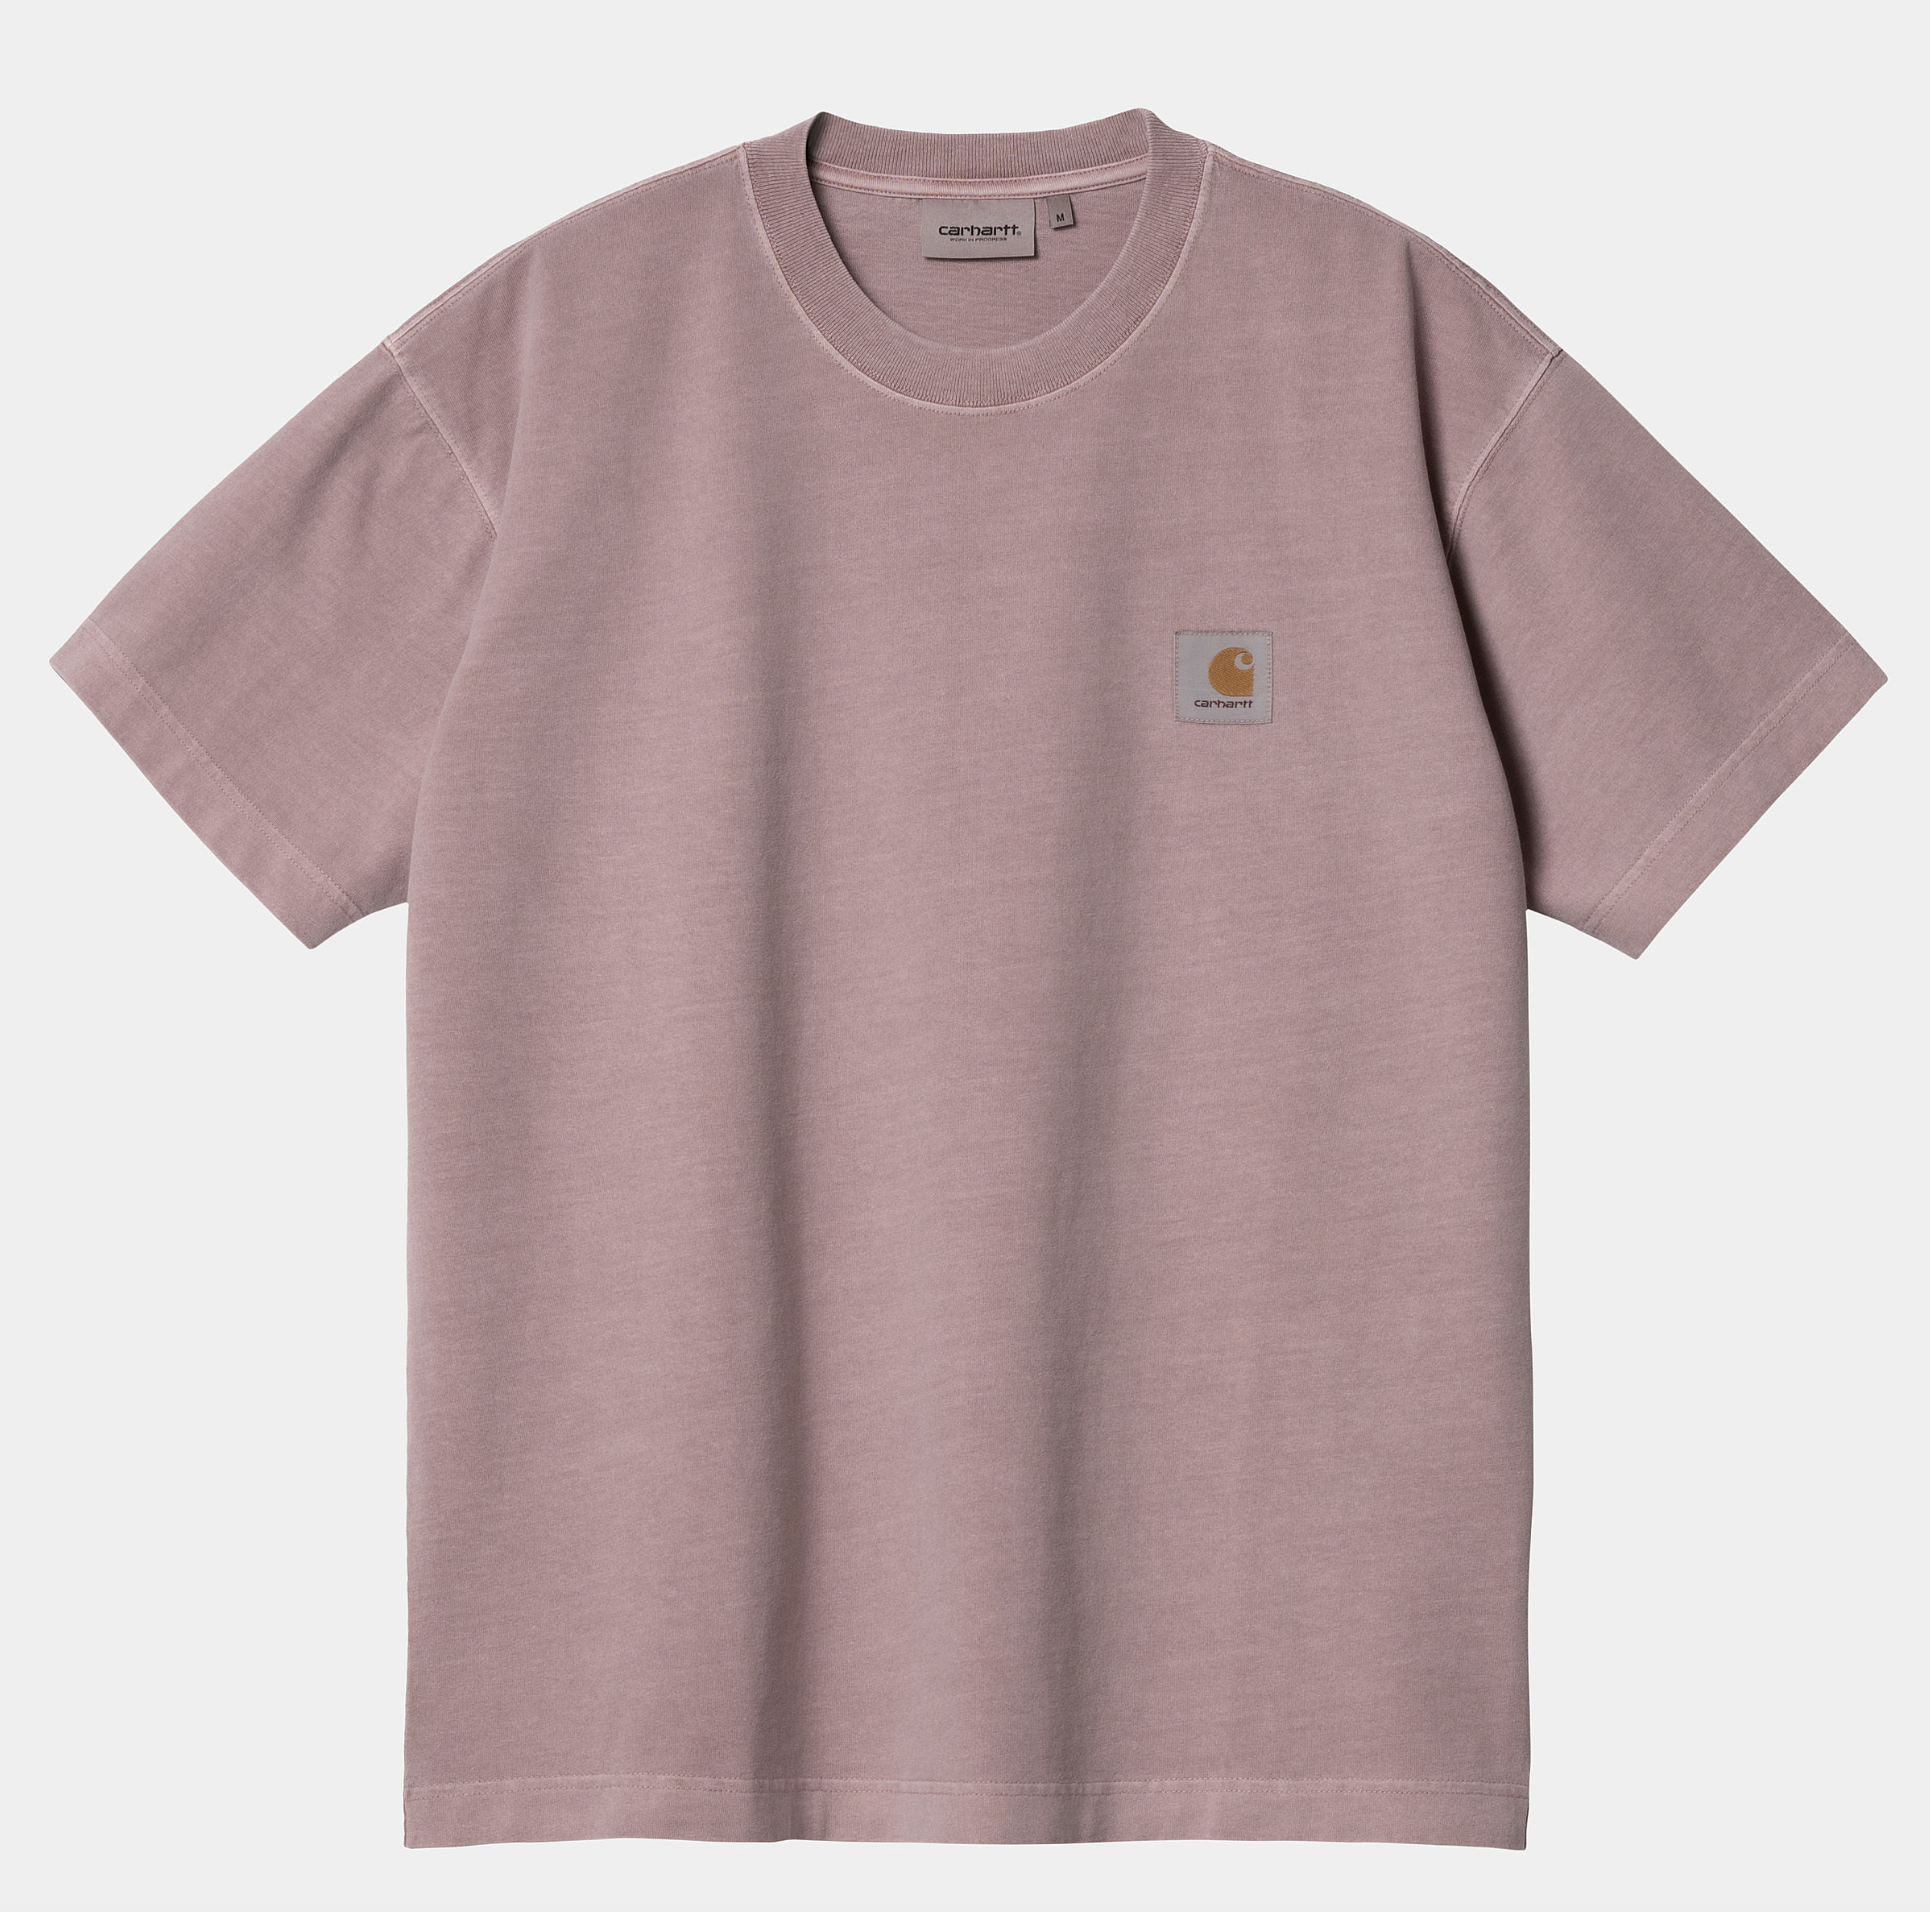 Camiseta Carhartt Vista - Glassy Pink